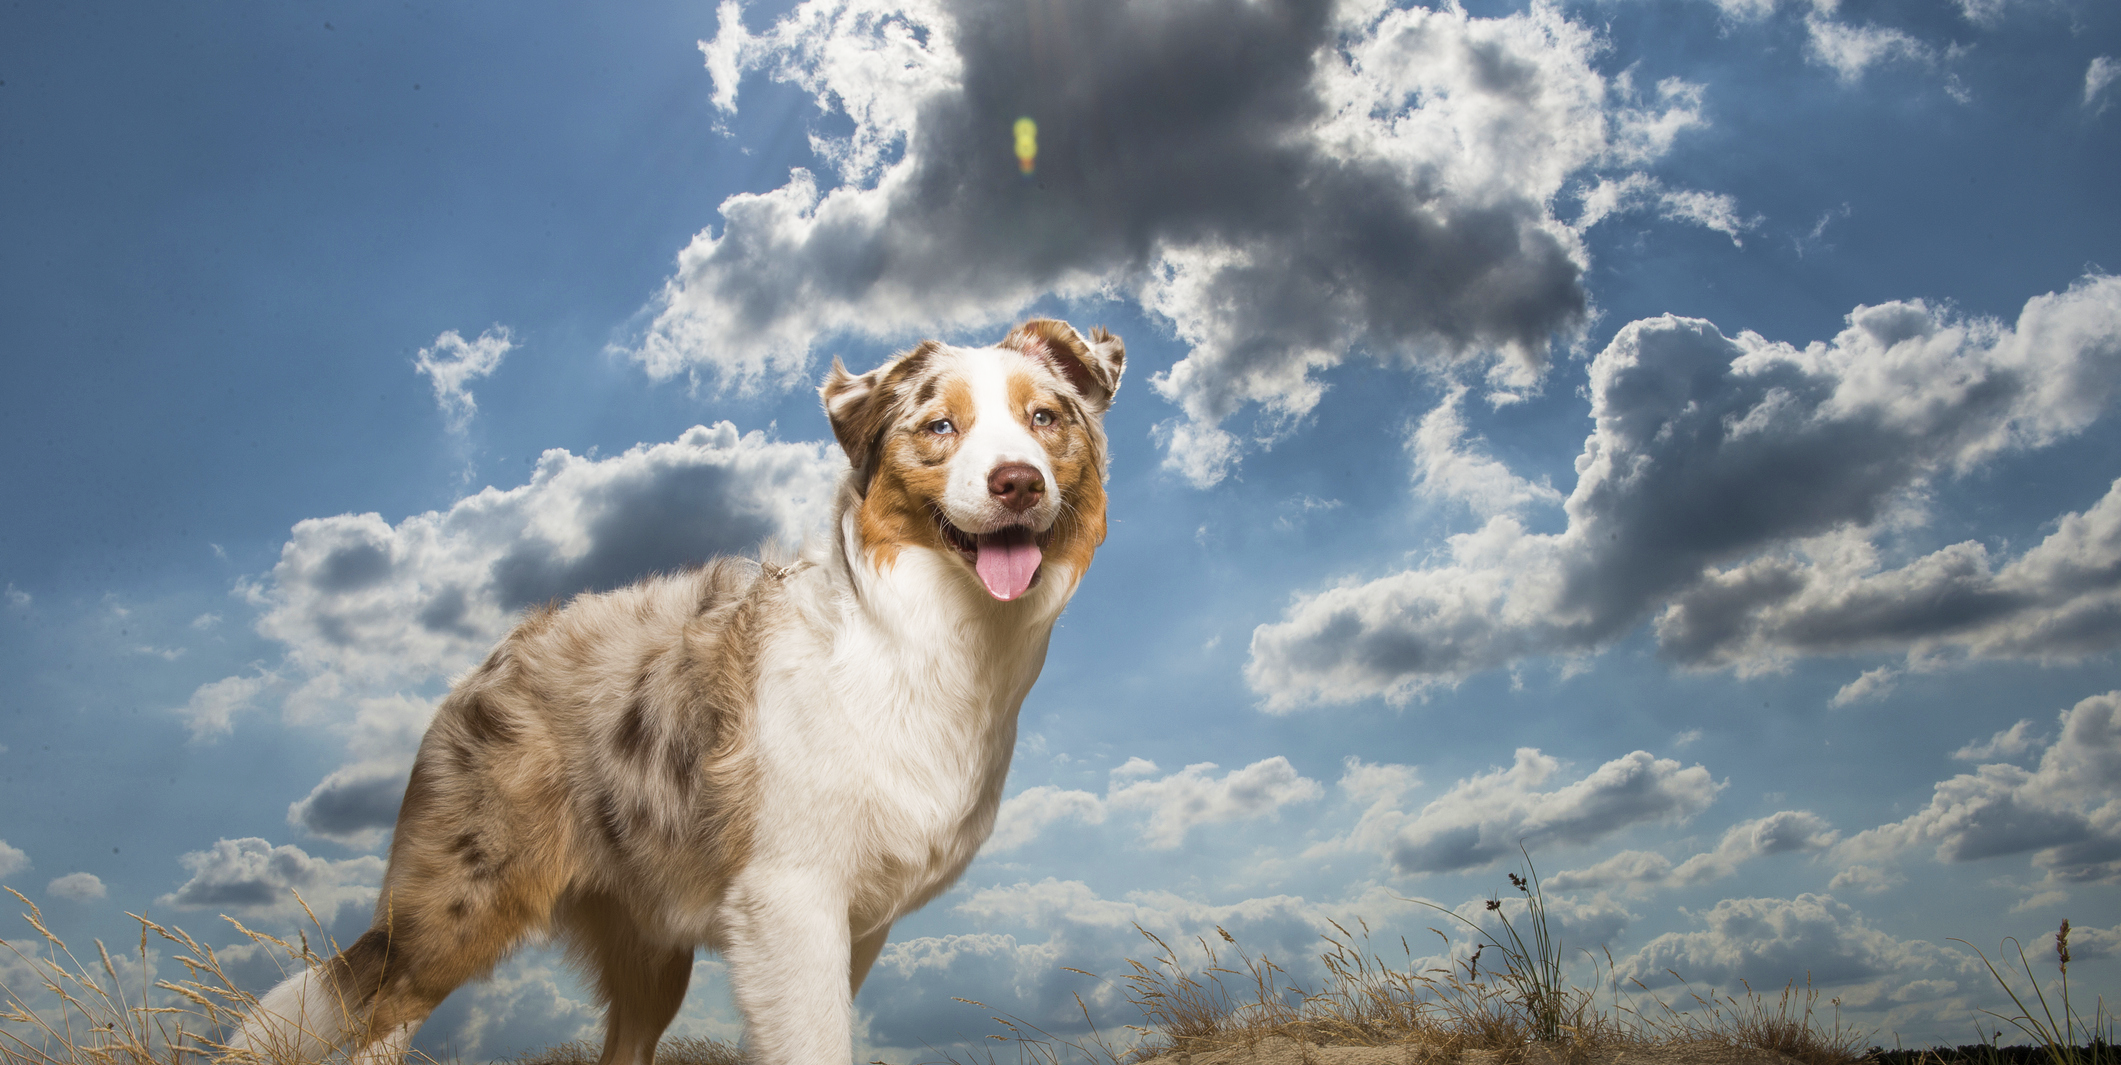 can dogs sense good energy